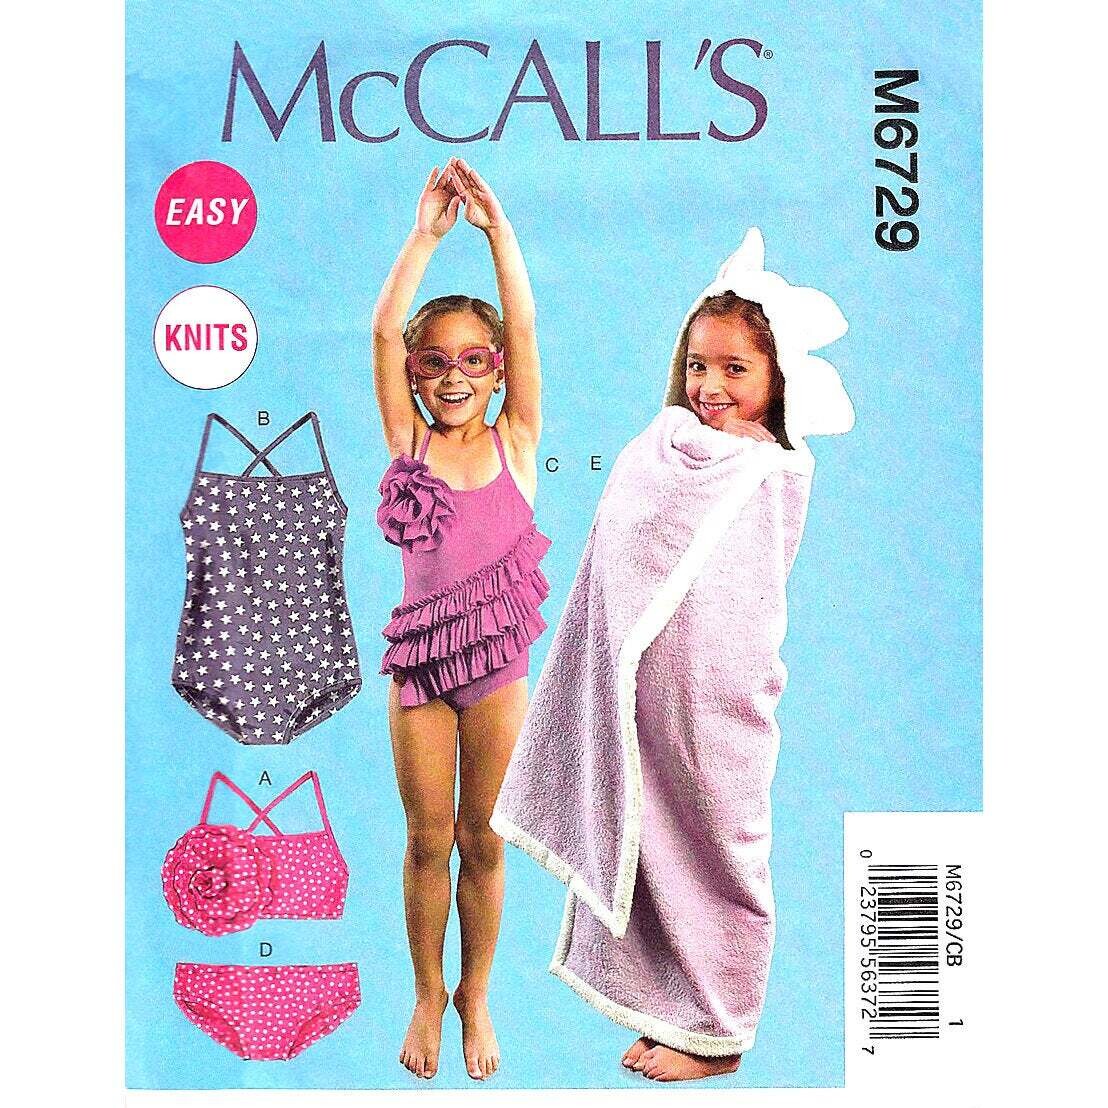 McCall's 6729 pattern